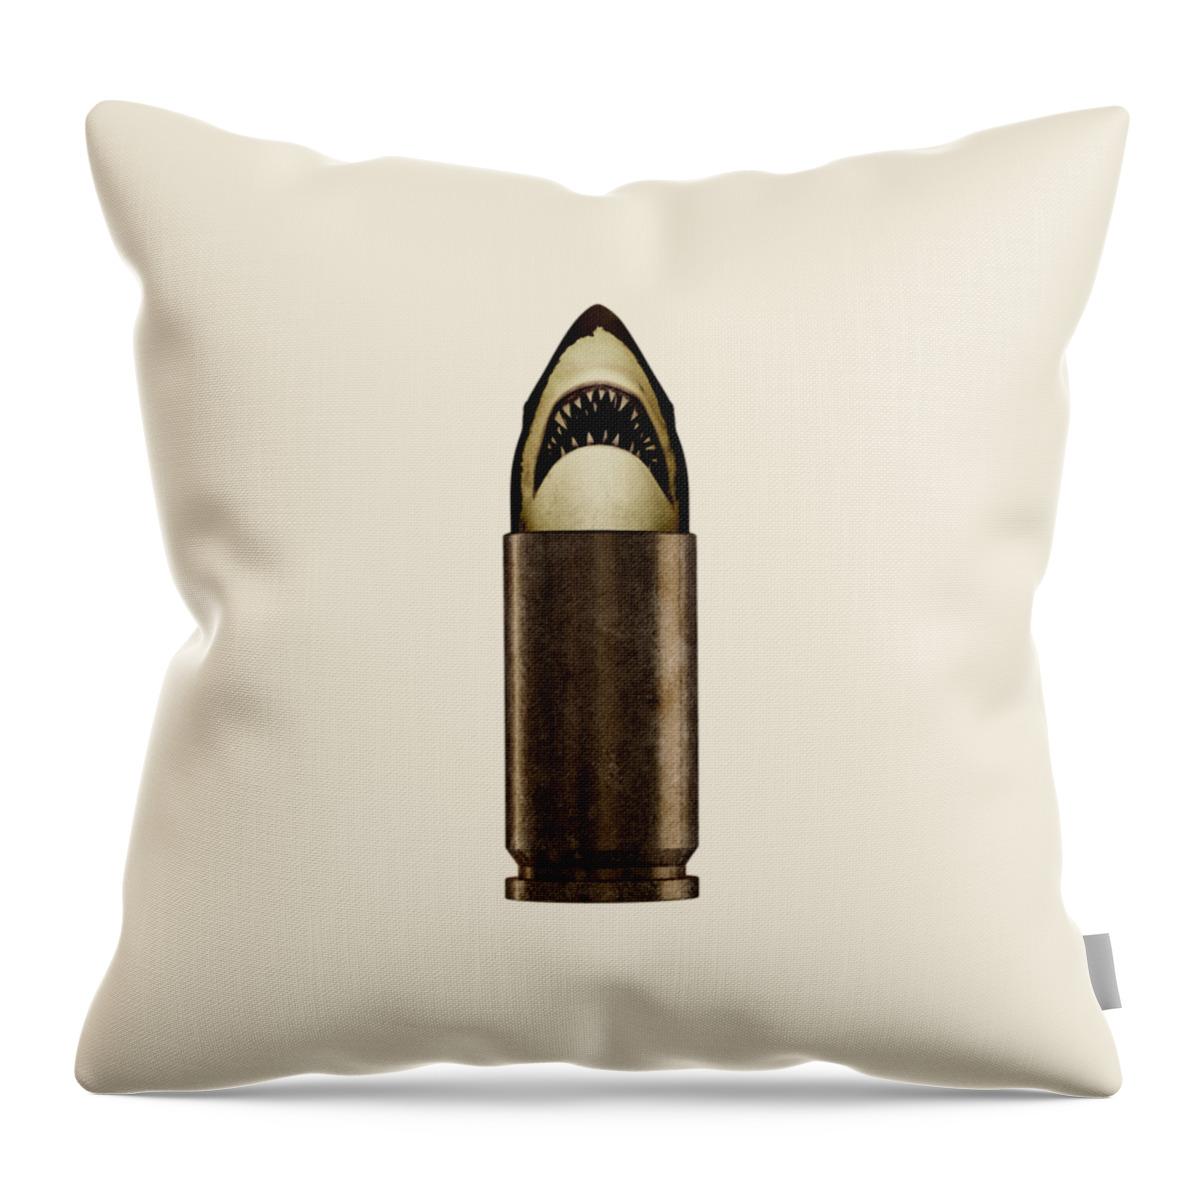 #faatoppicks Throw Pillow featuring the digital art Shell Shark by Nicholas Ely